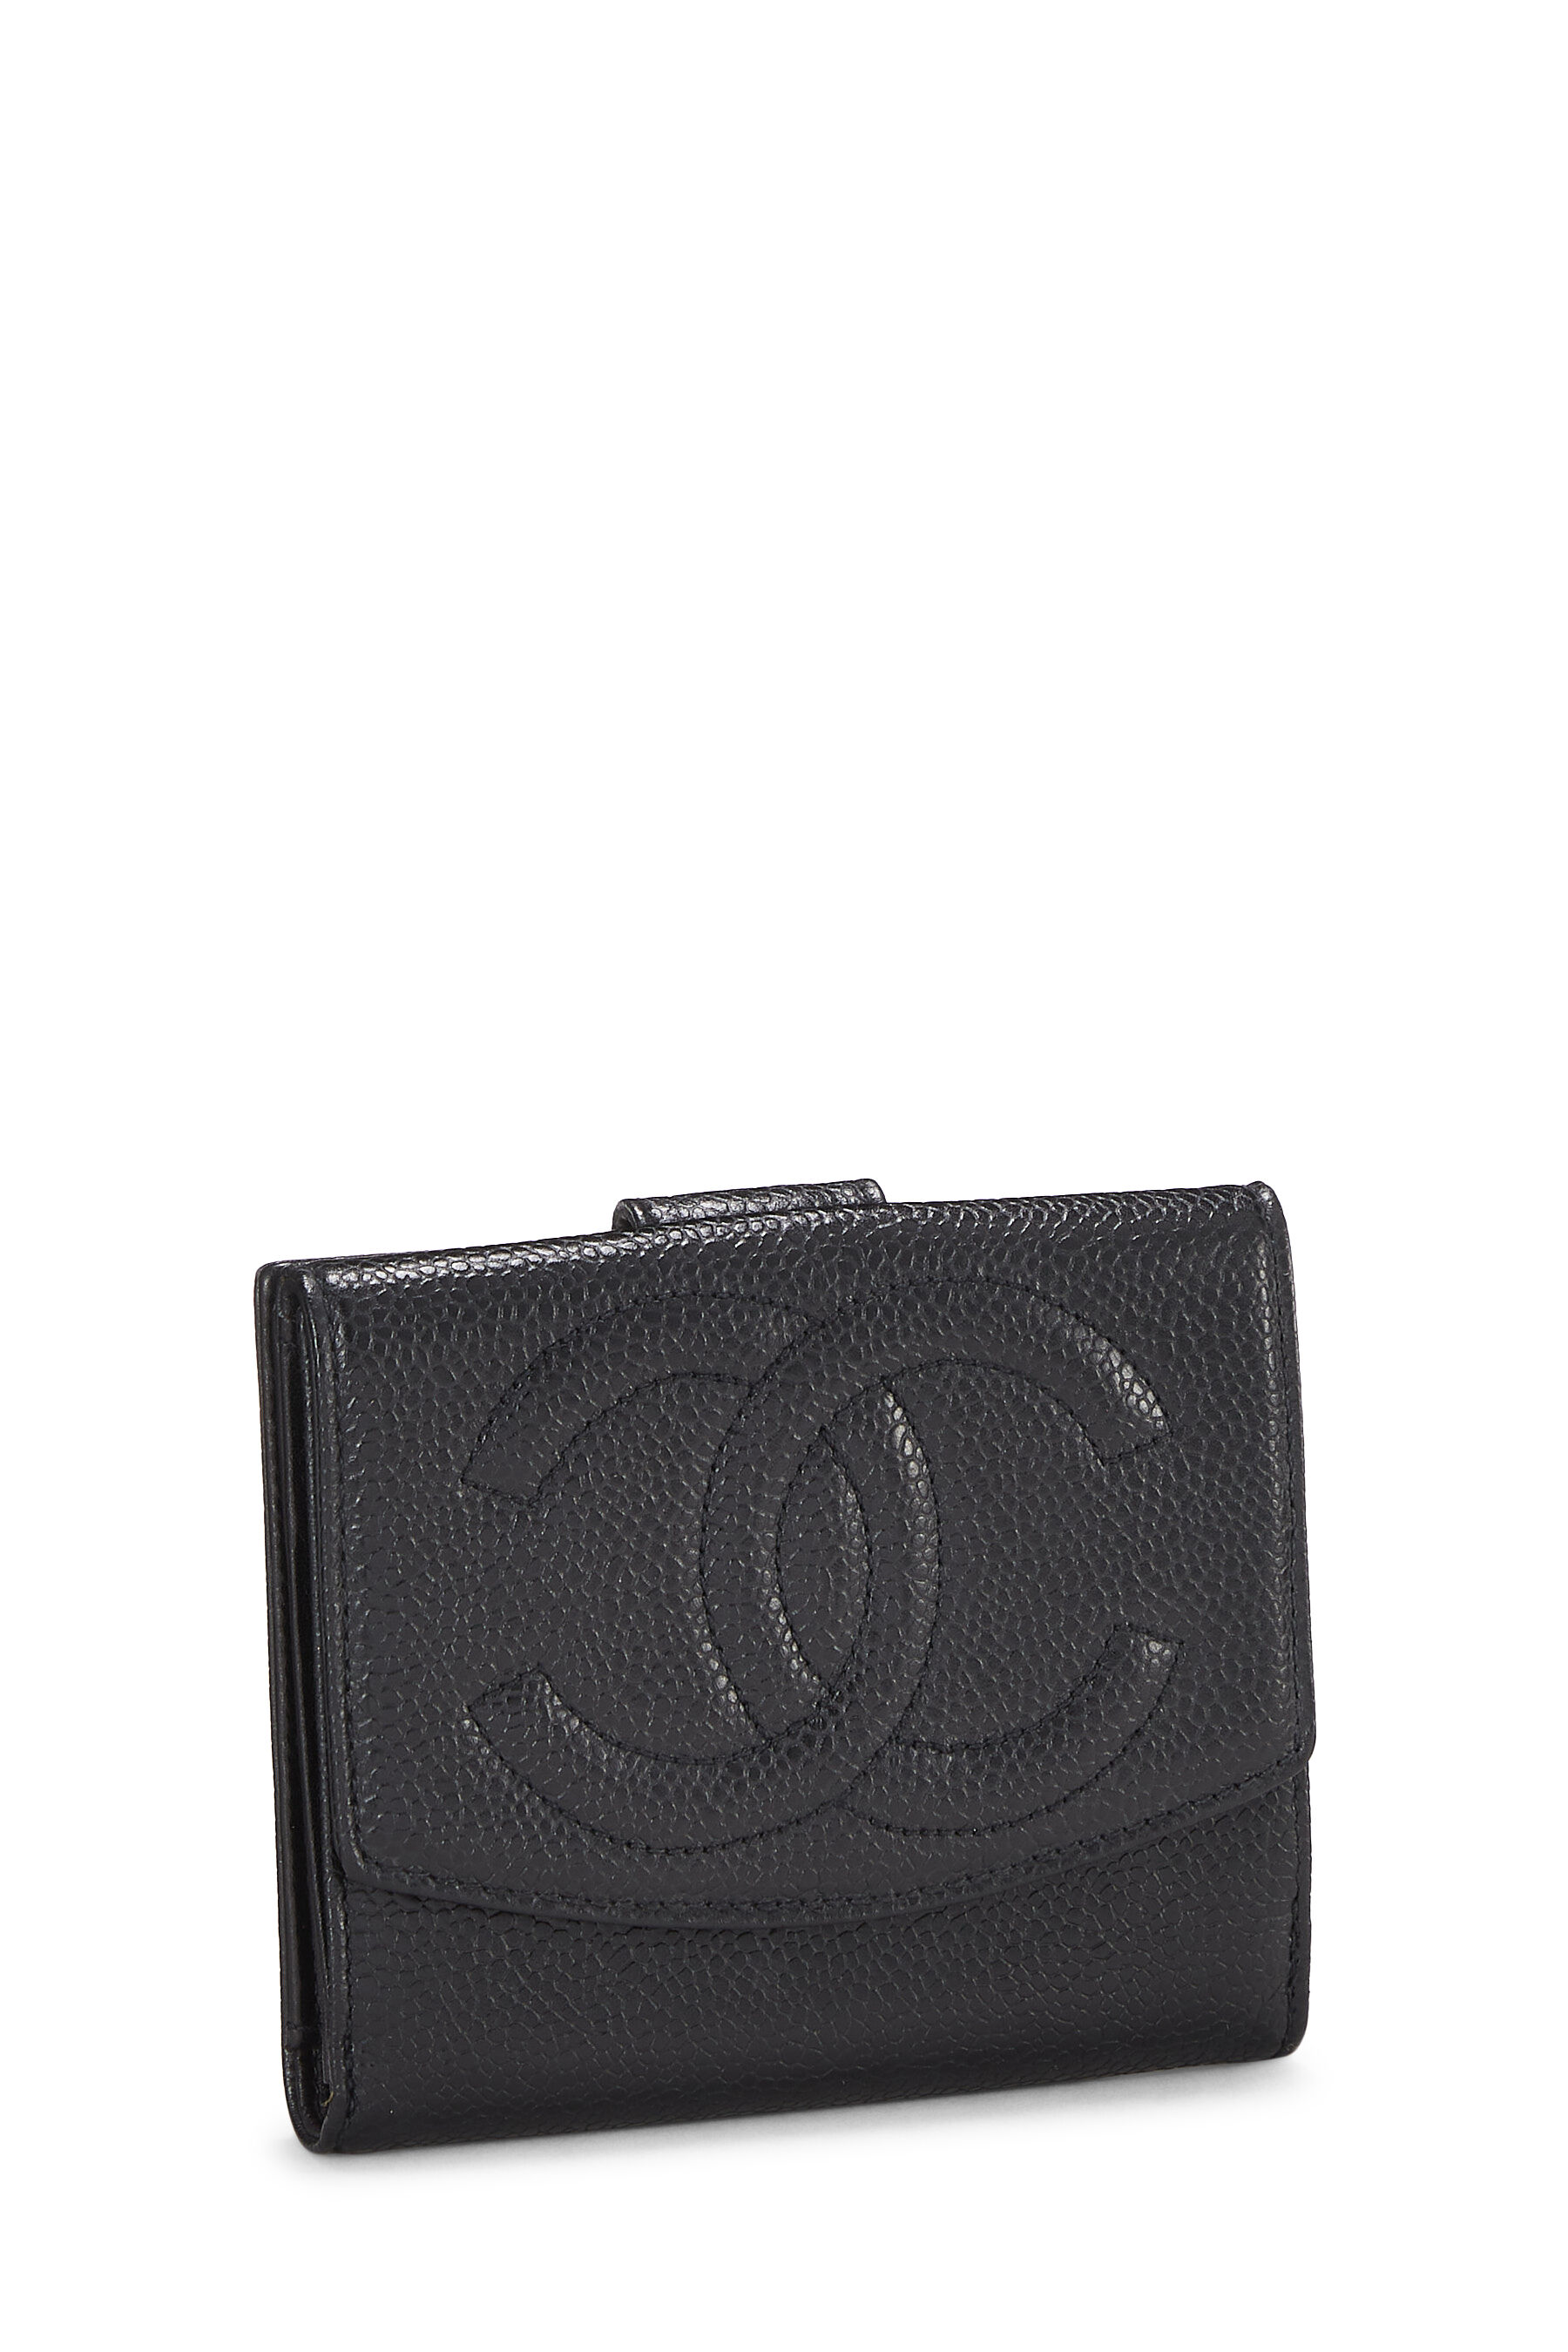 Chanel - Black Caviar Timeless 'CC' Wallet